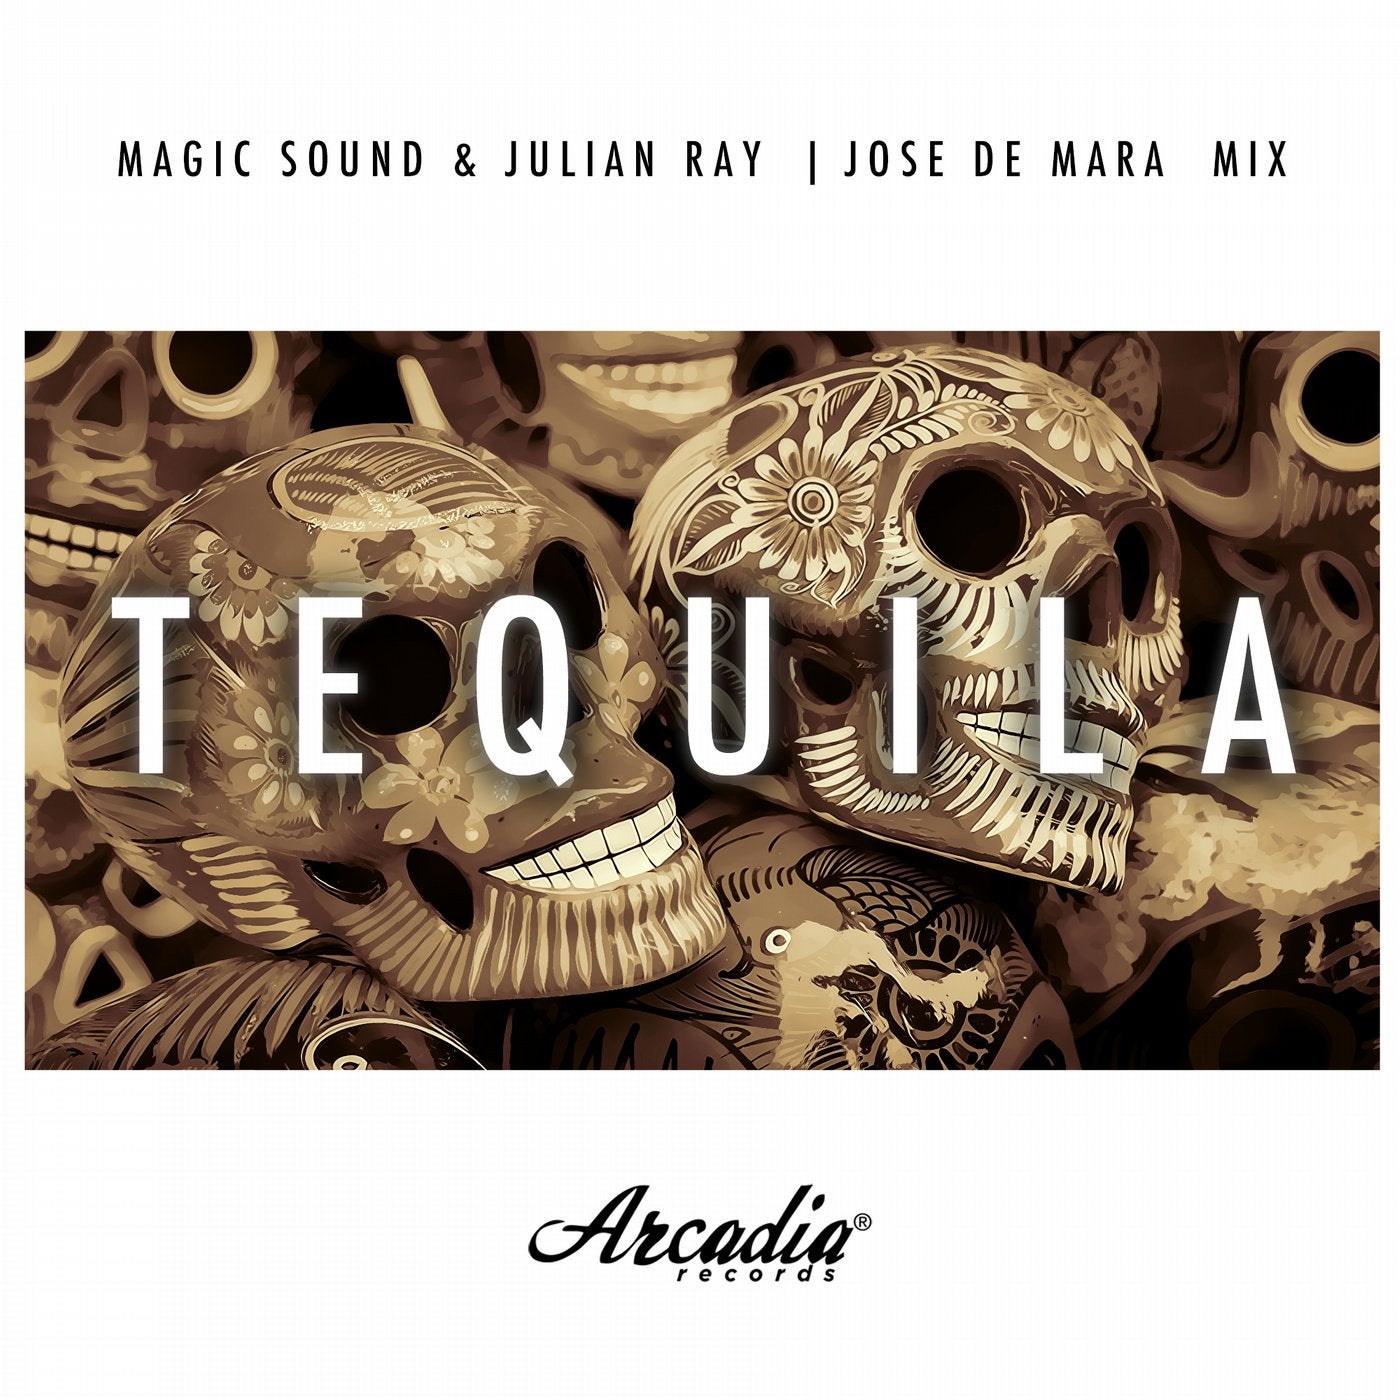 Tequila - Jose De Mara Mix